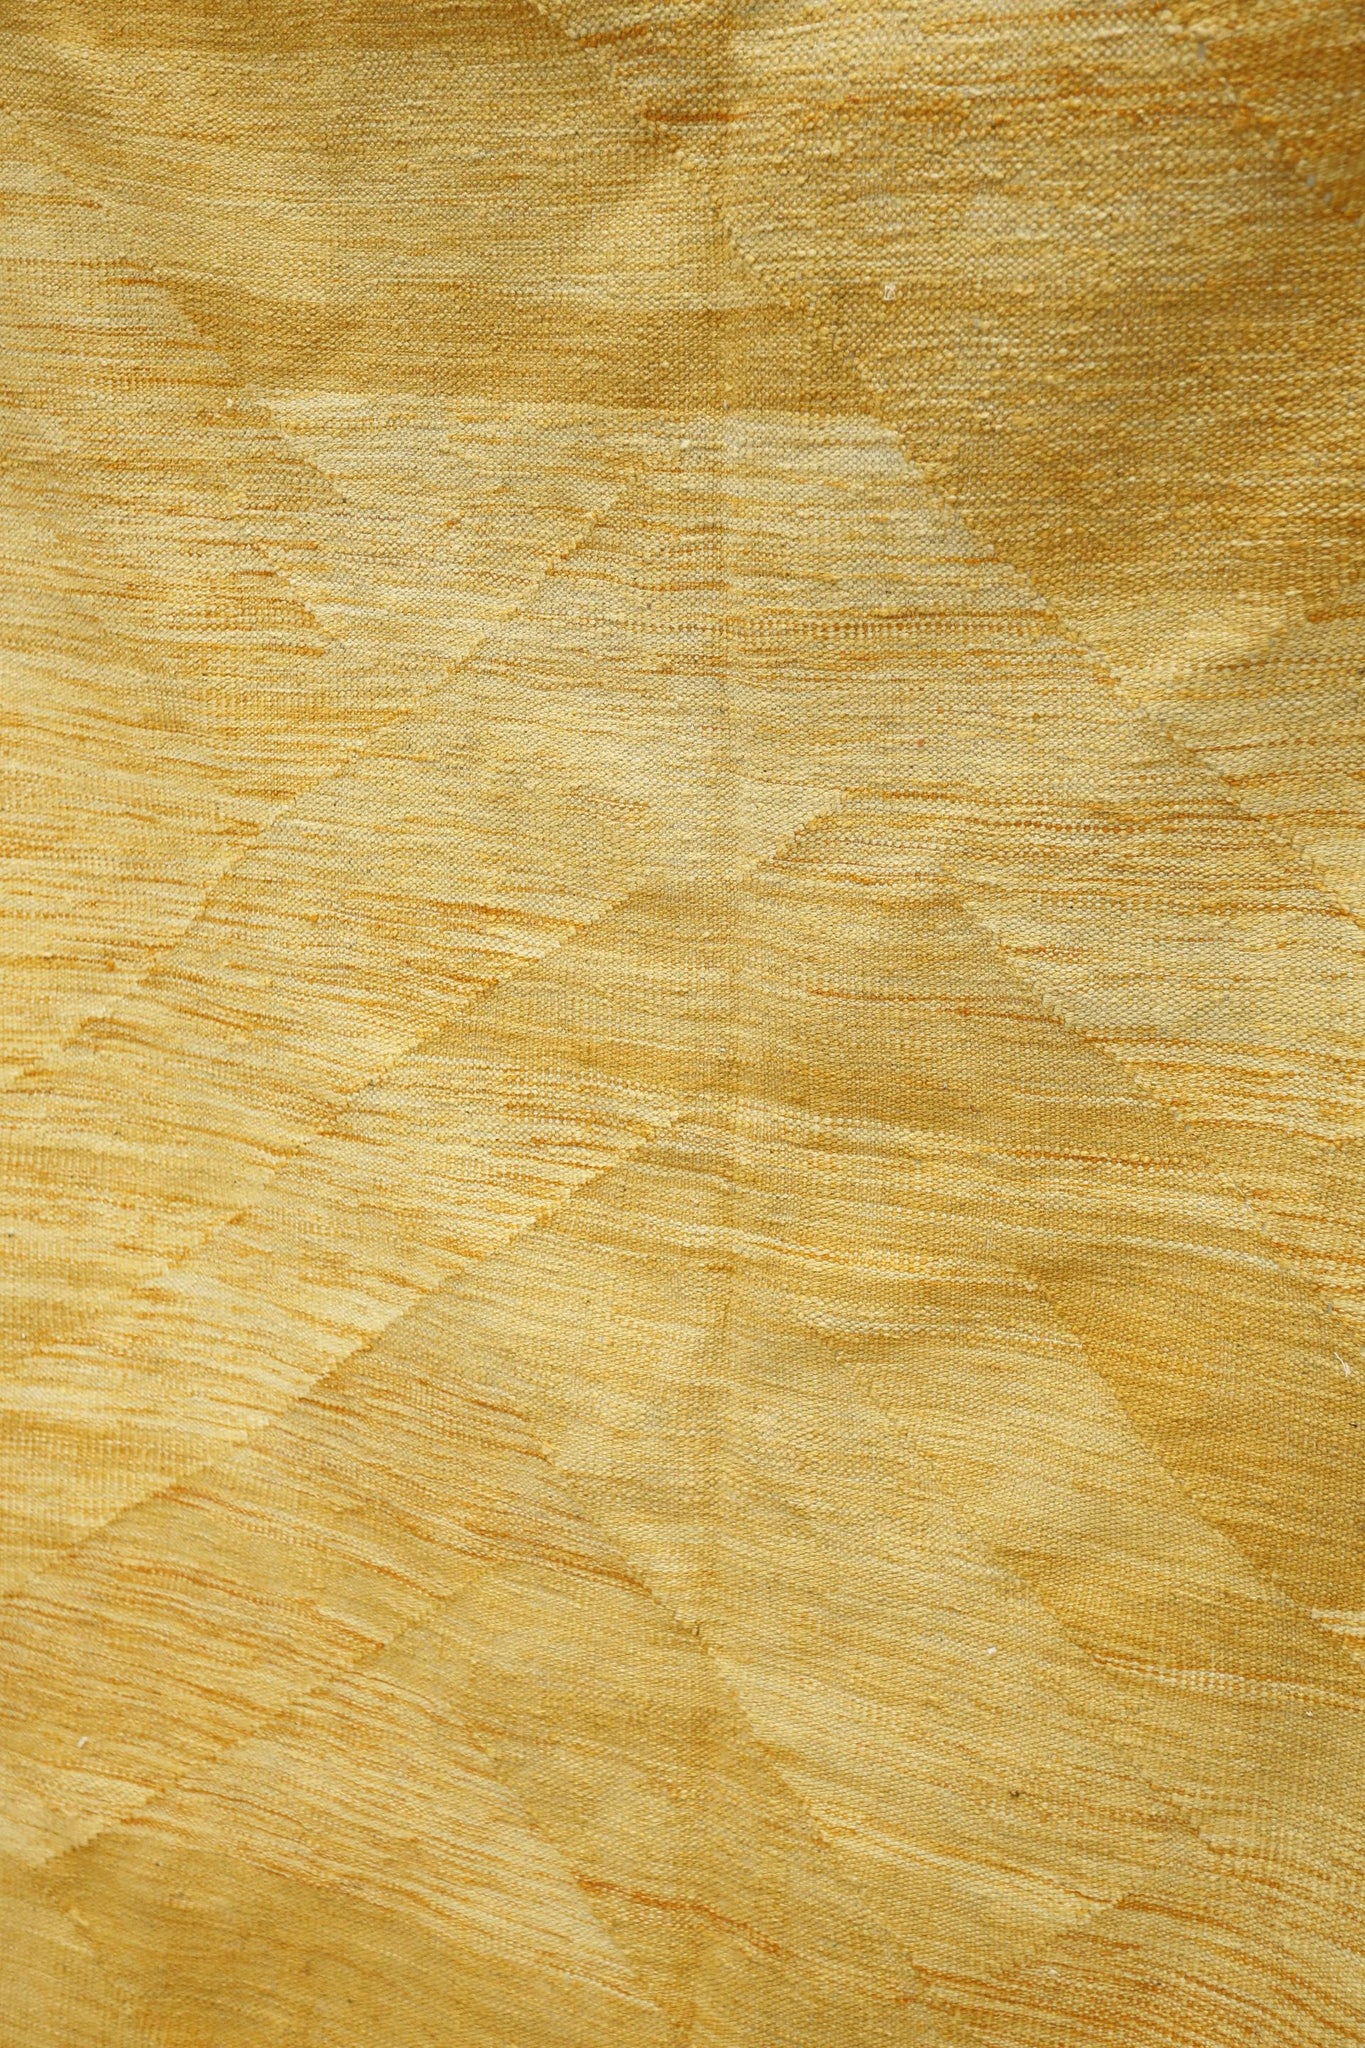 20th century Plain kilim rug in yellow